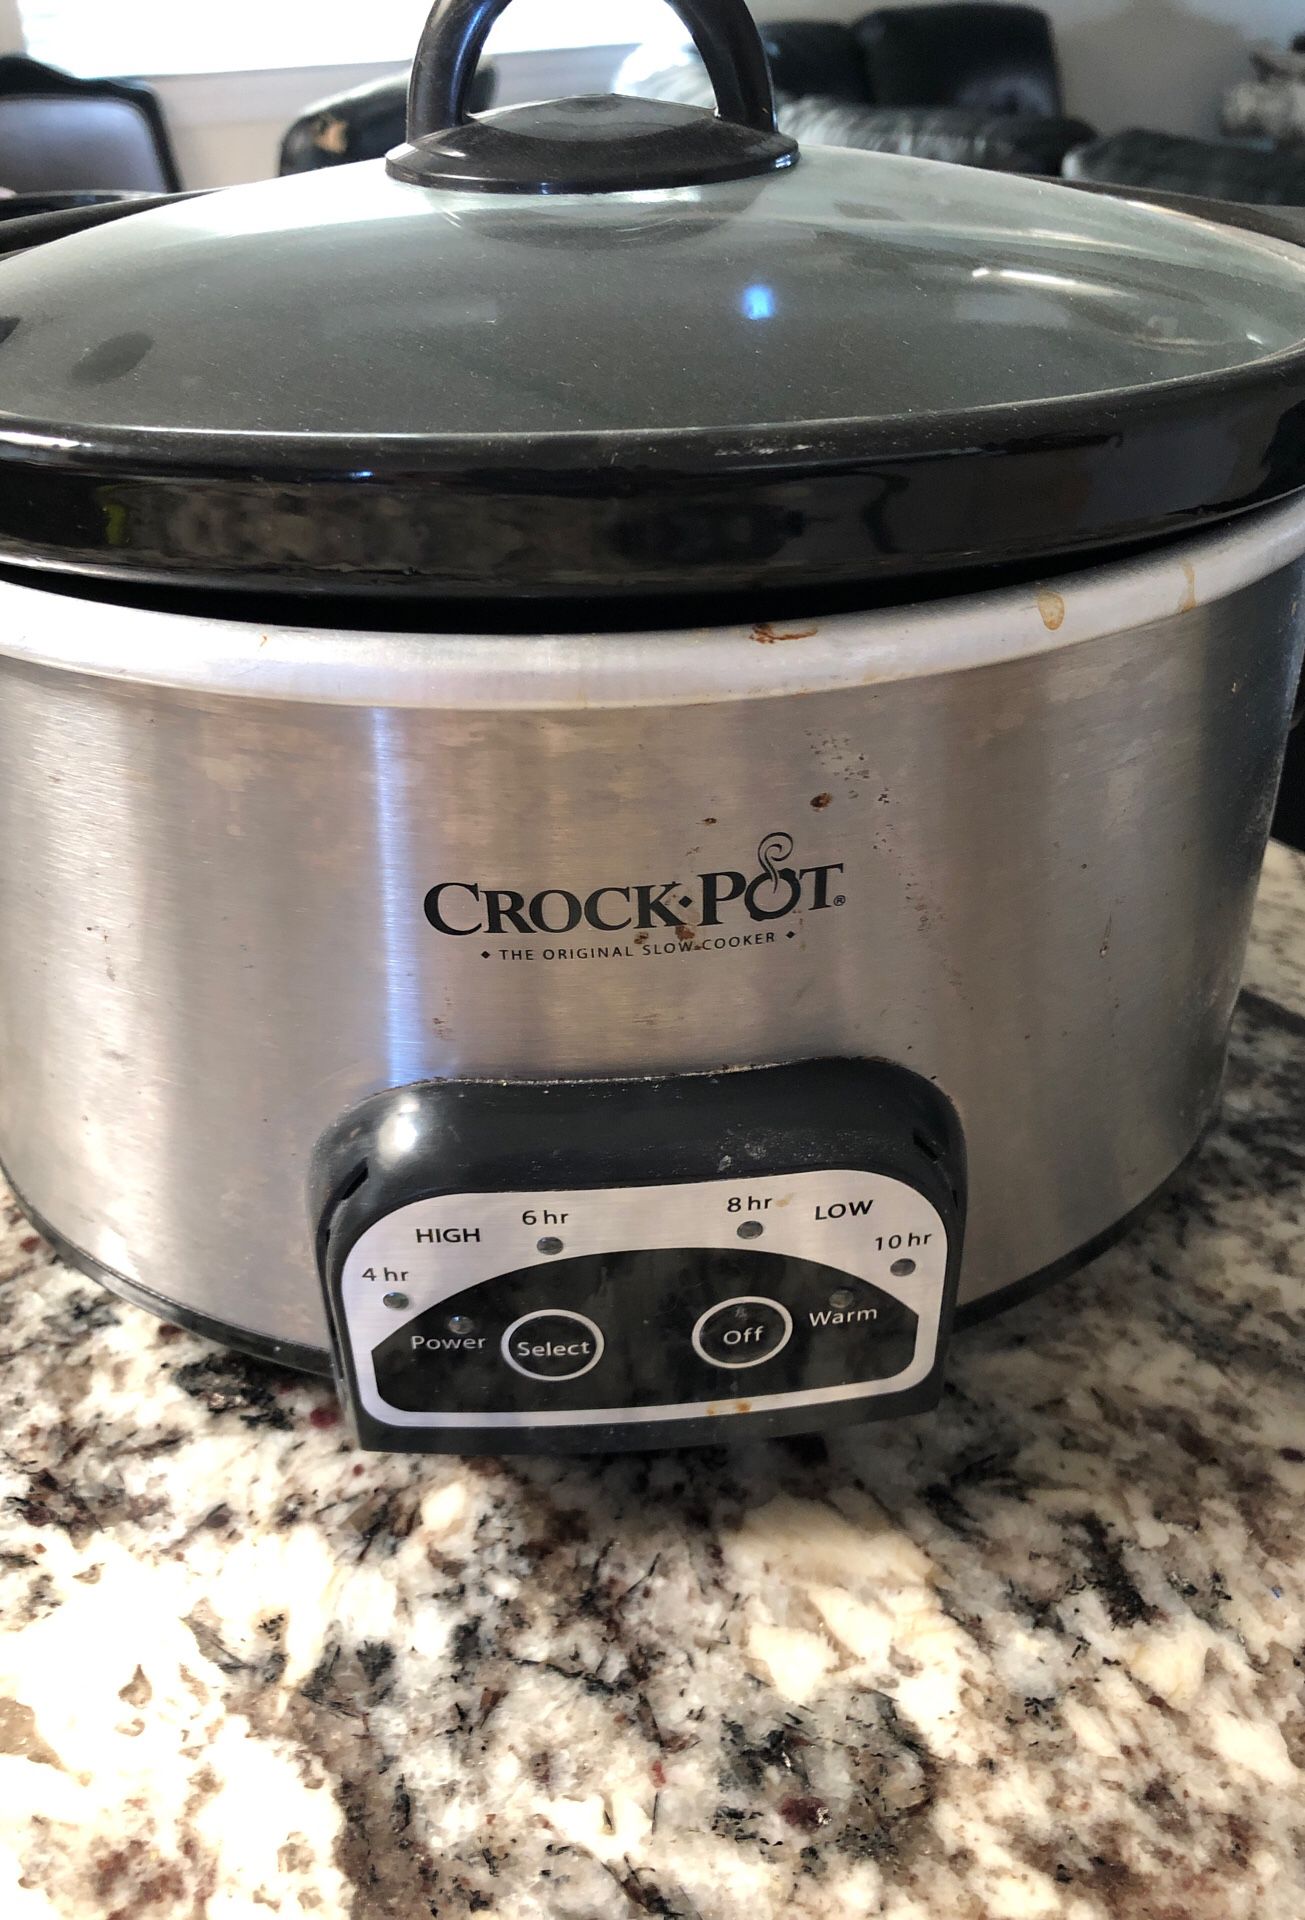 Smaller crock pot